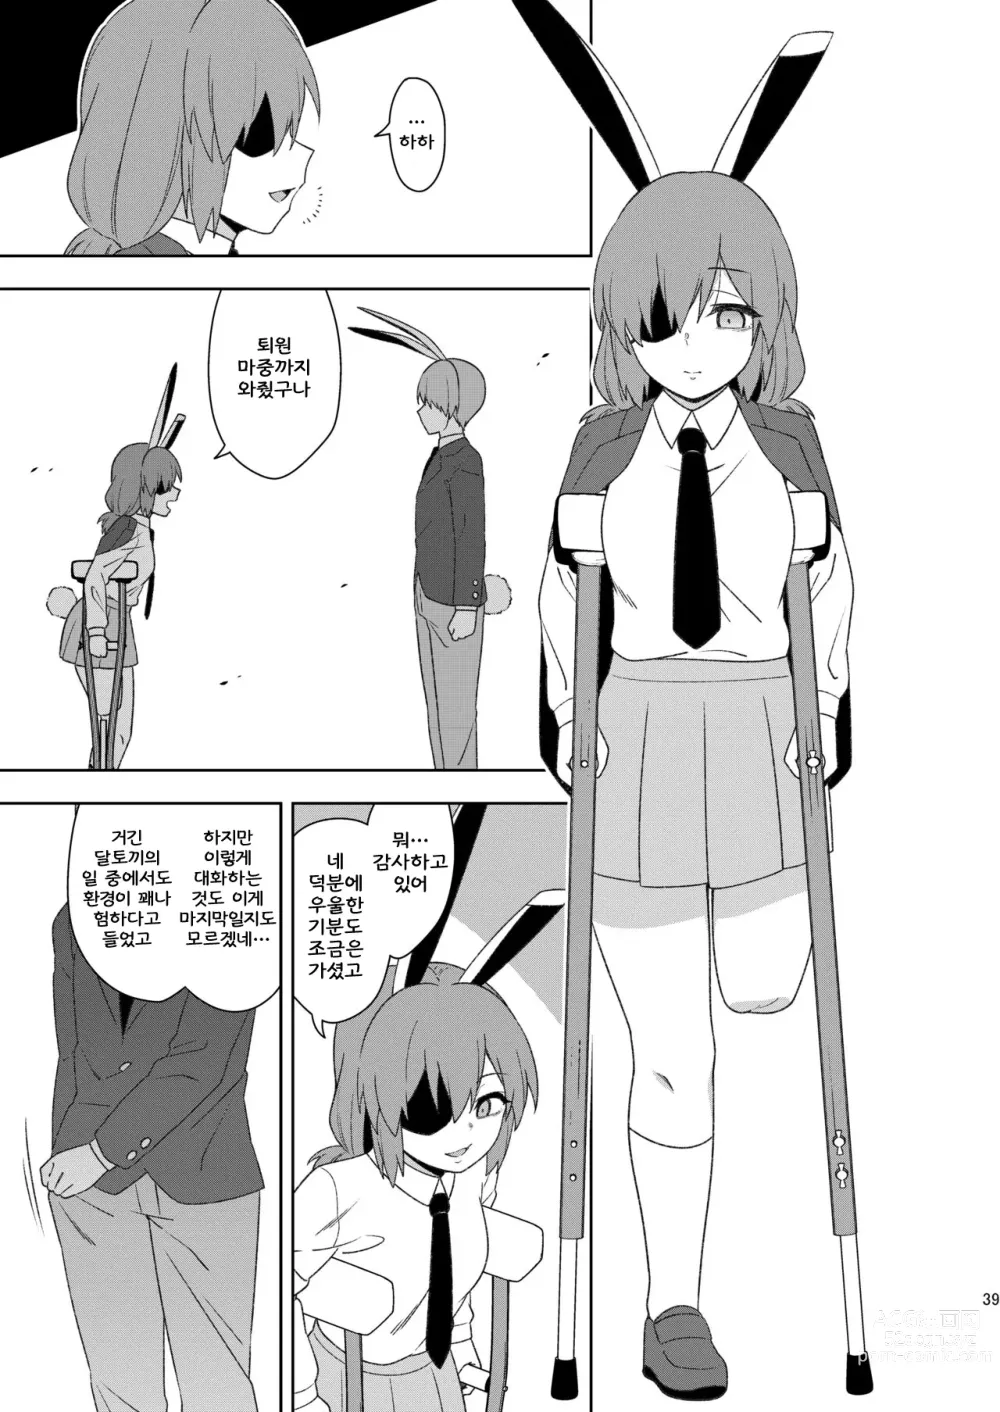 Page 39 of doujinshi 전화의 달토끼